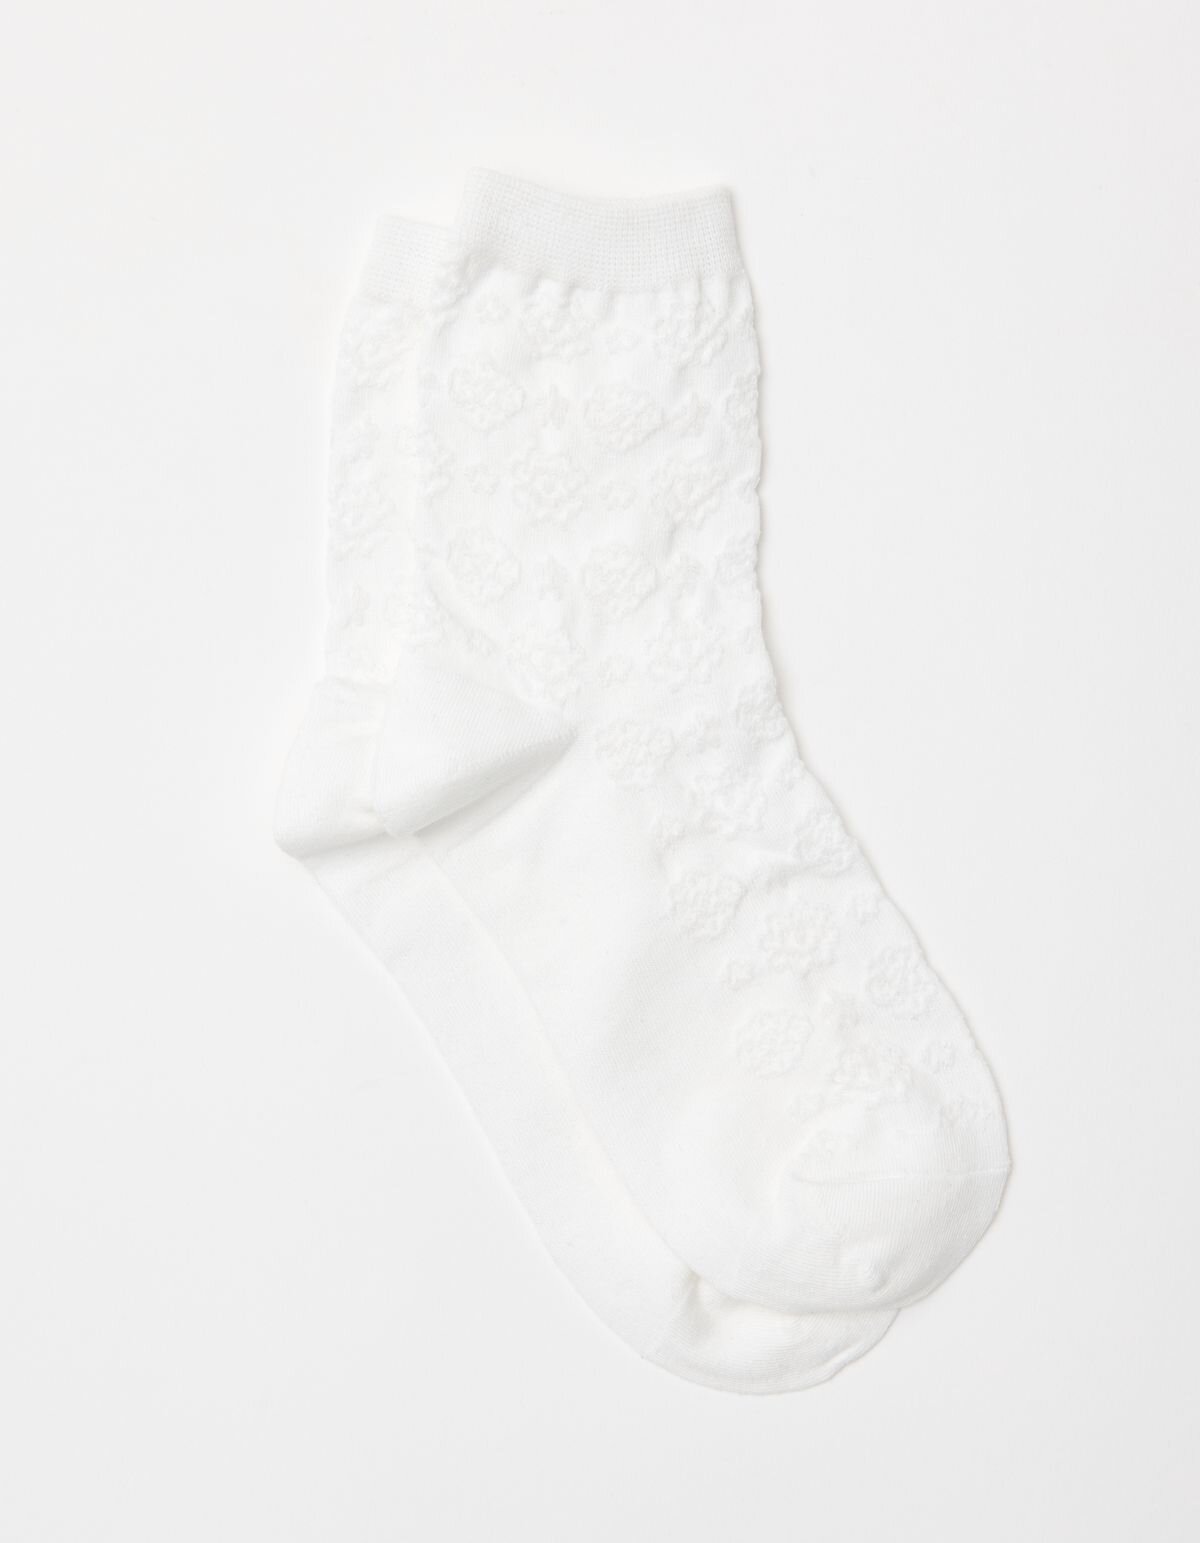 Texture White Socks - Brand-Stella & Gemma Accessories : Preview ...